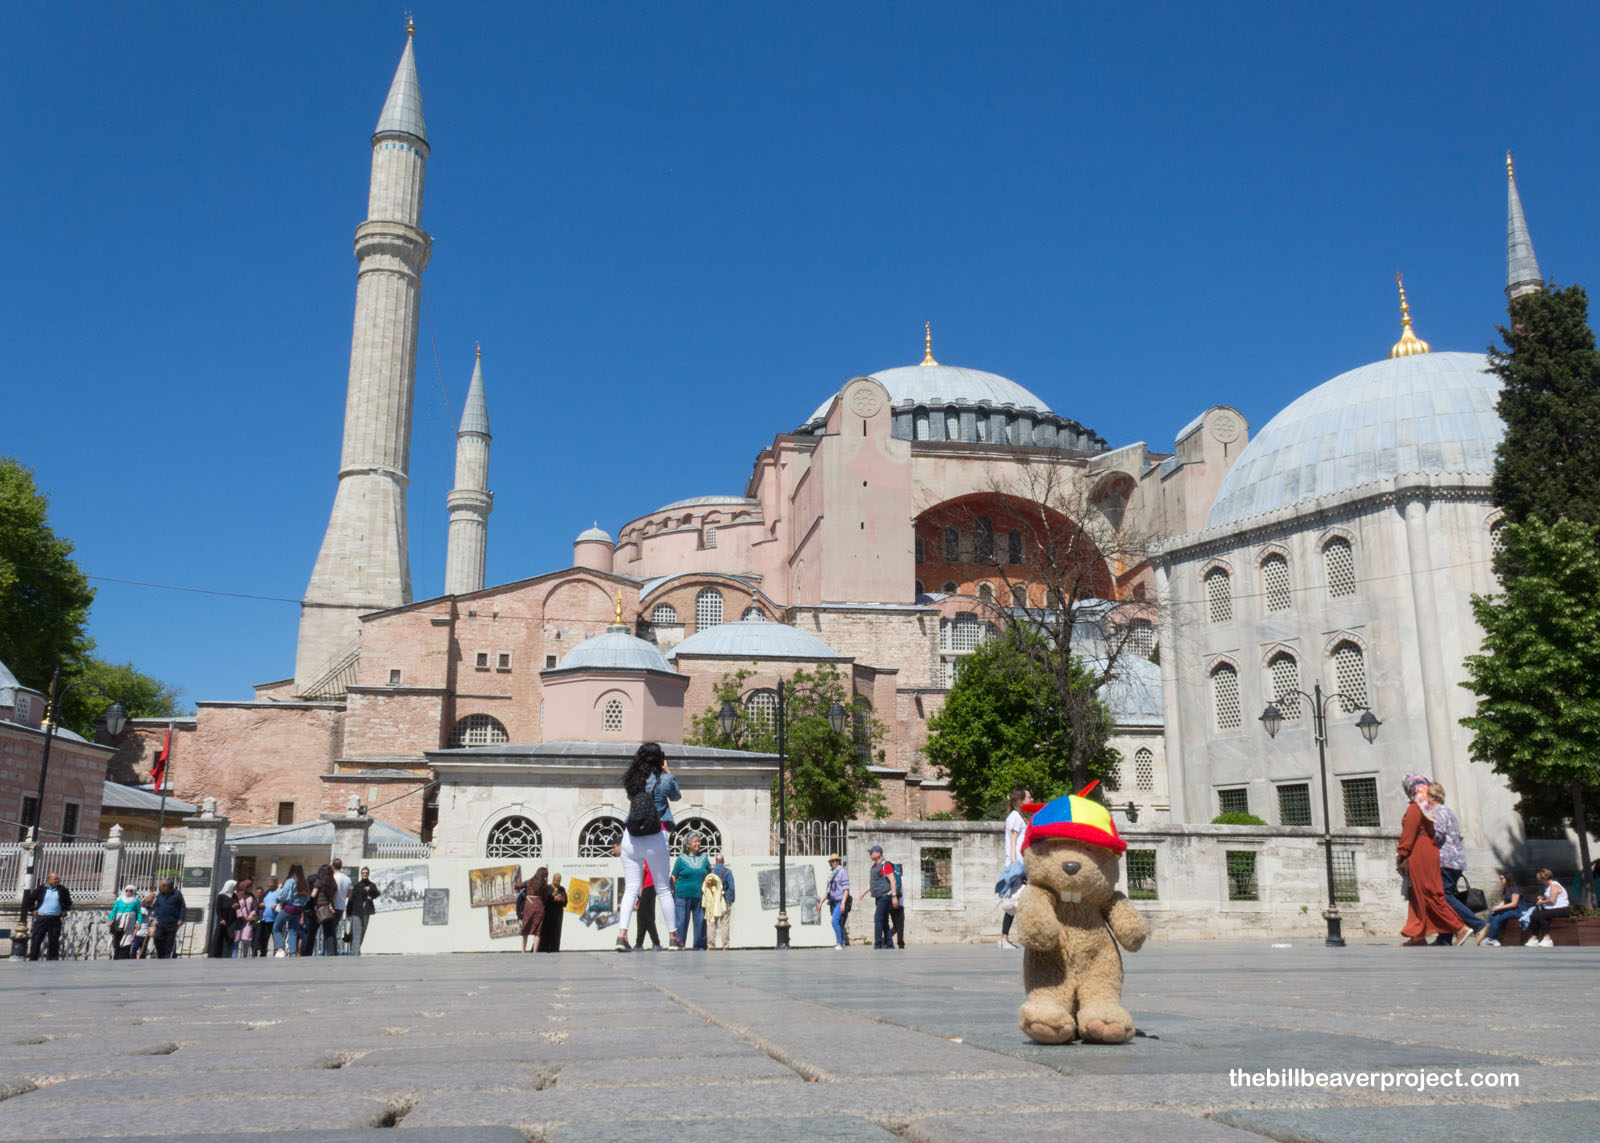 A closer view of the Hagia Sophia!